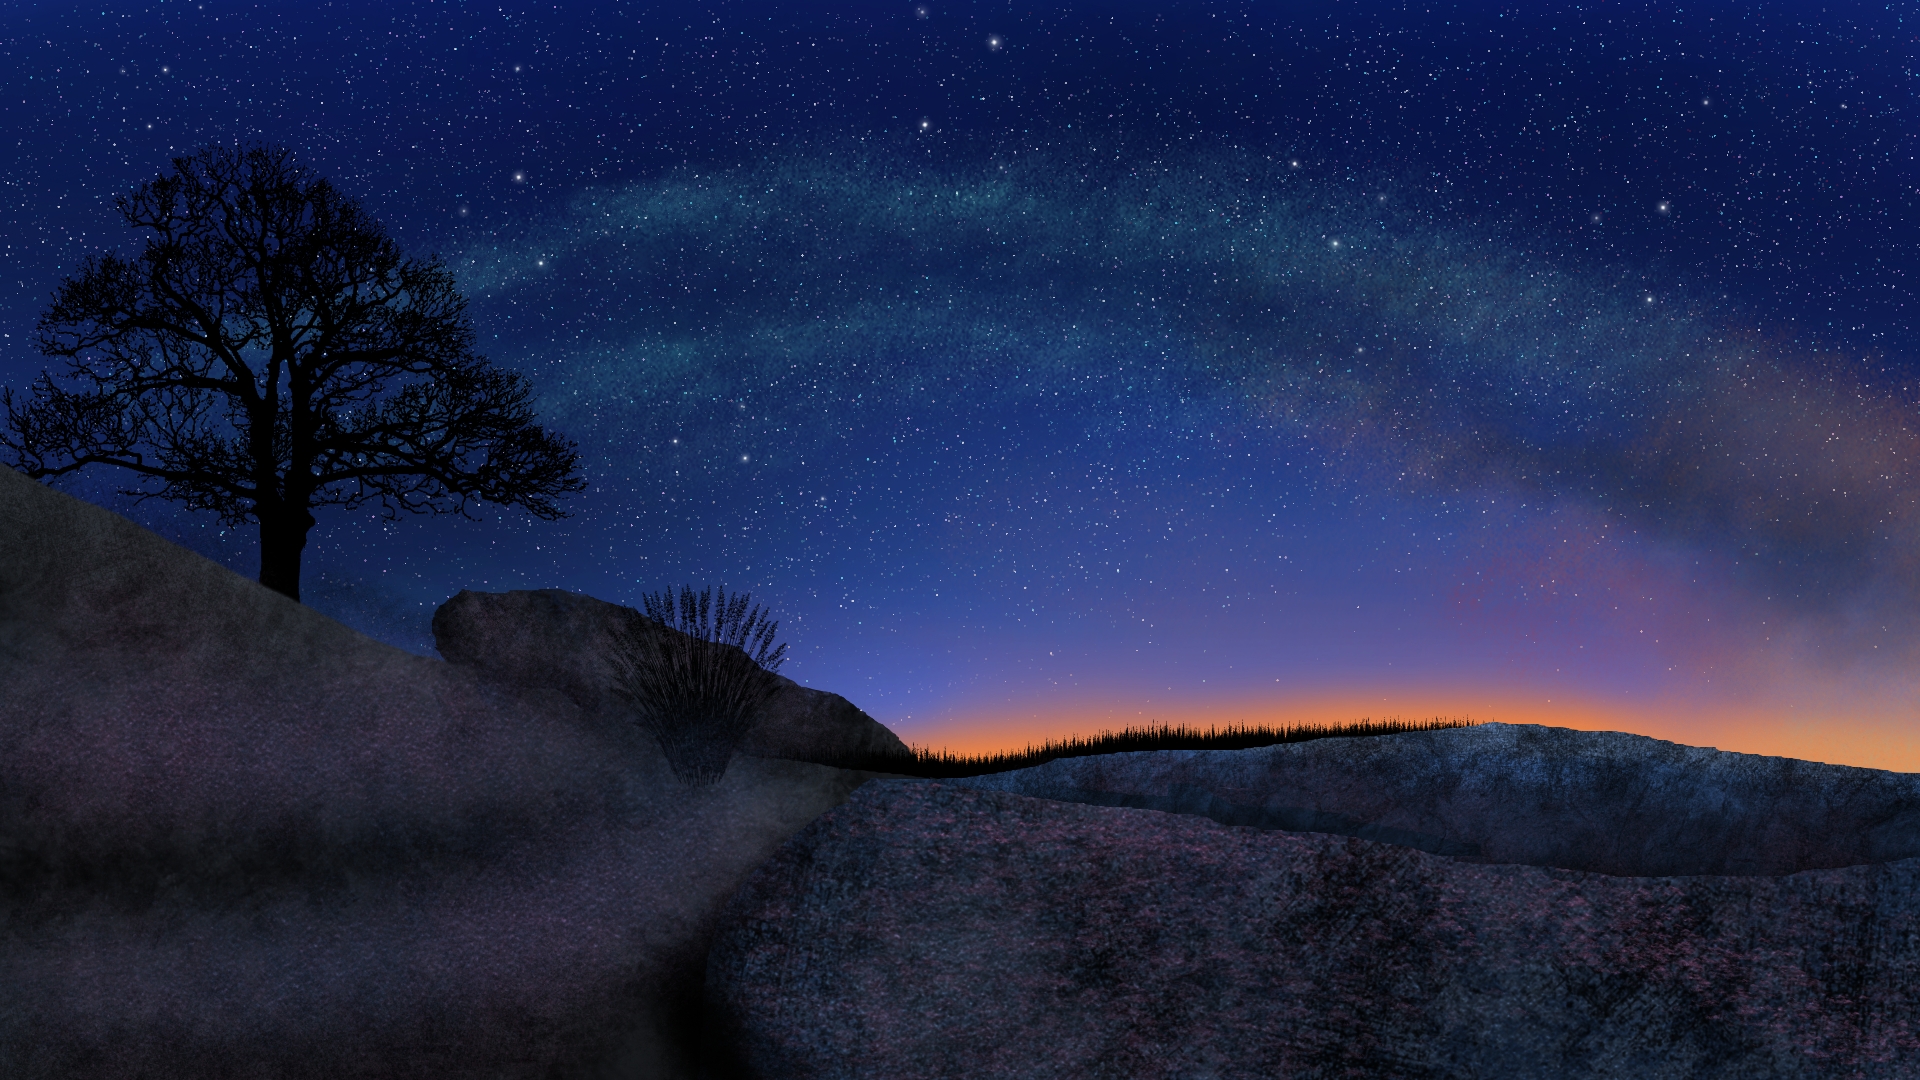 General 1920x1080 digi-art digital painting landscape starry night colorful night sky stars trees nature natural light